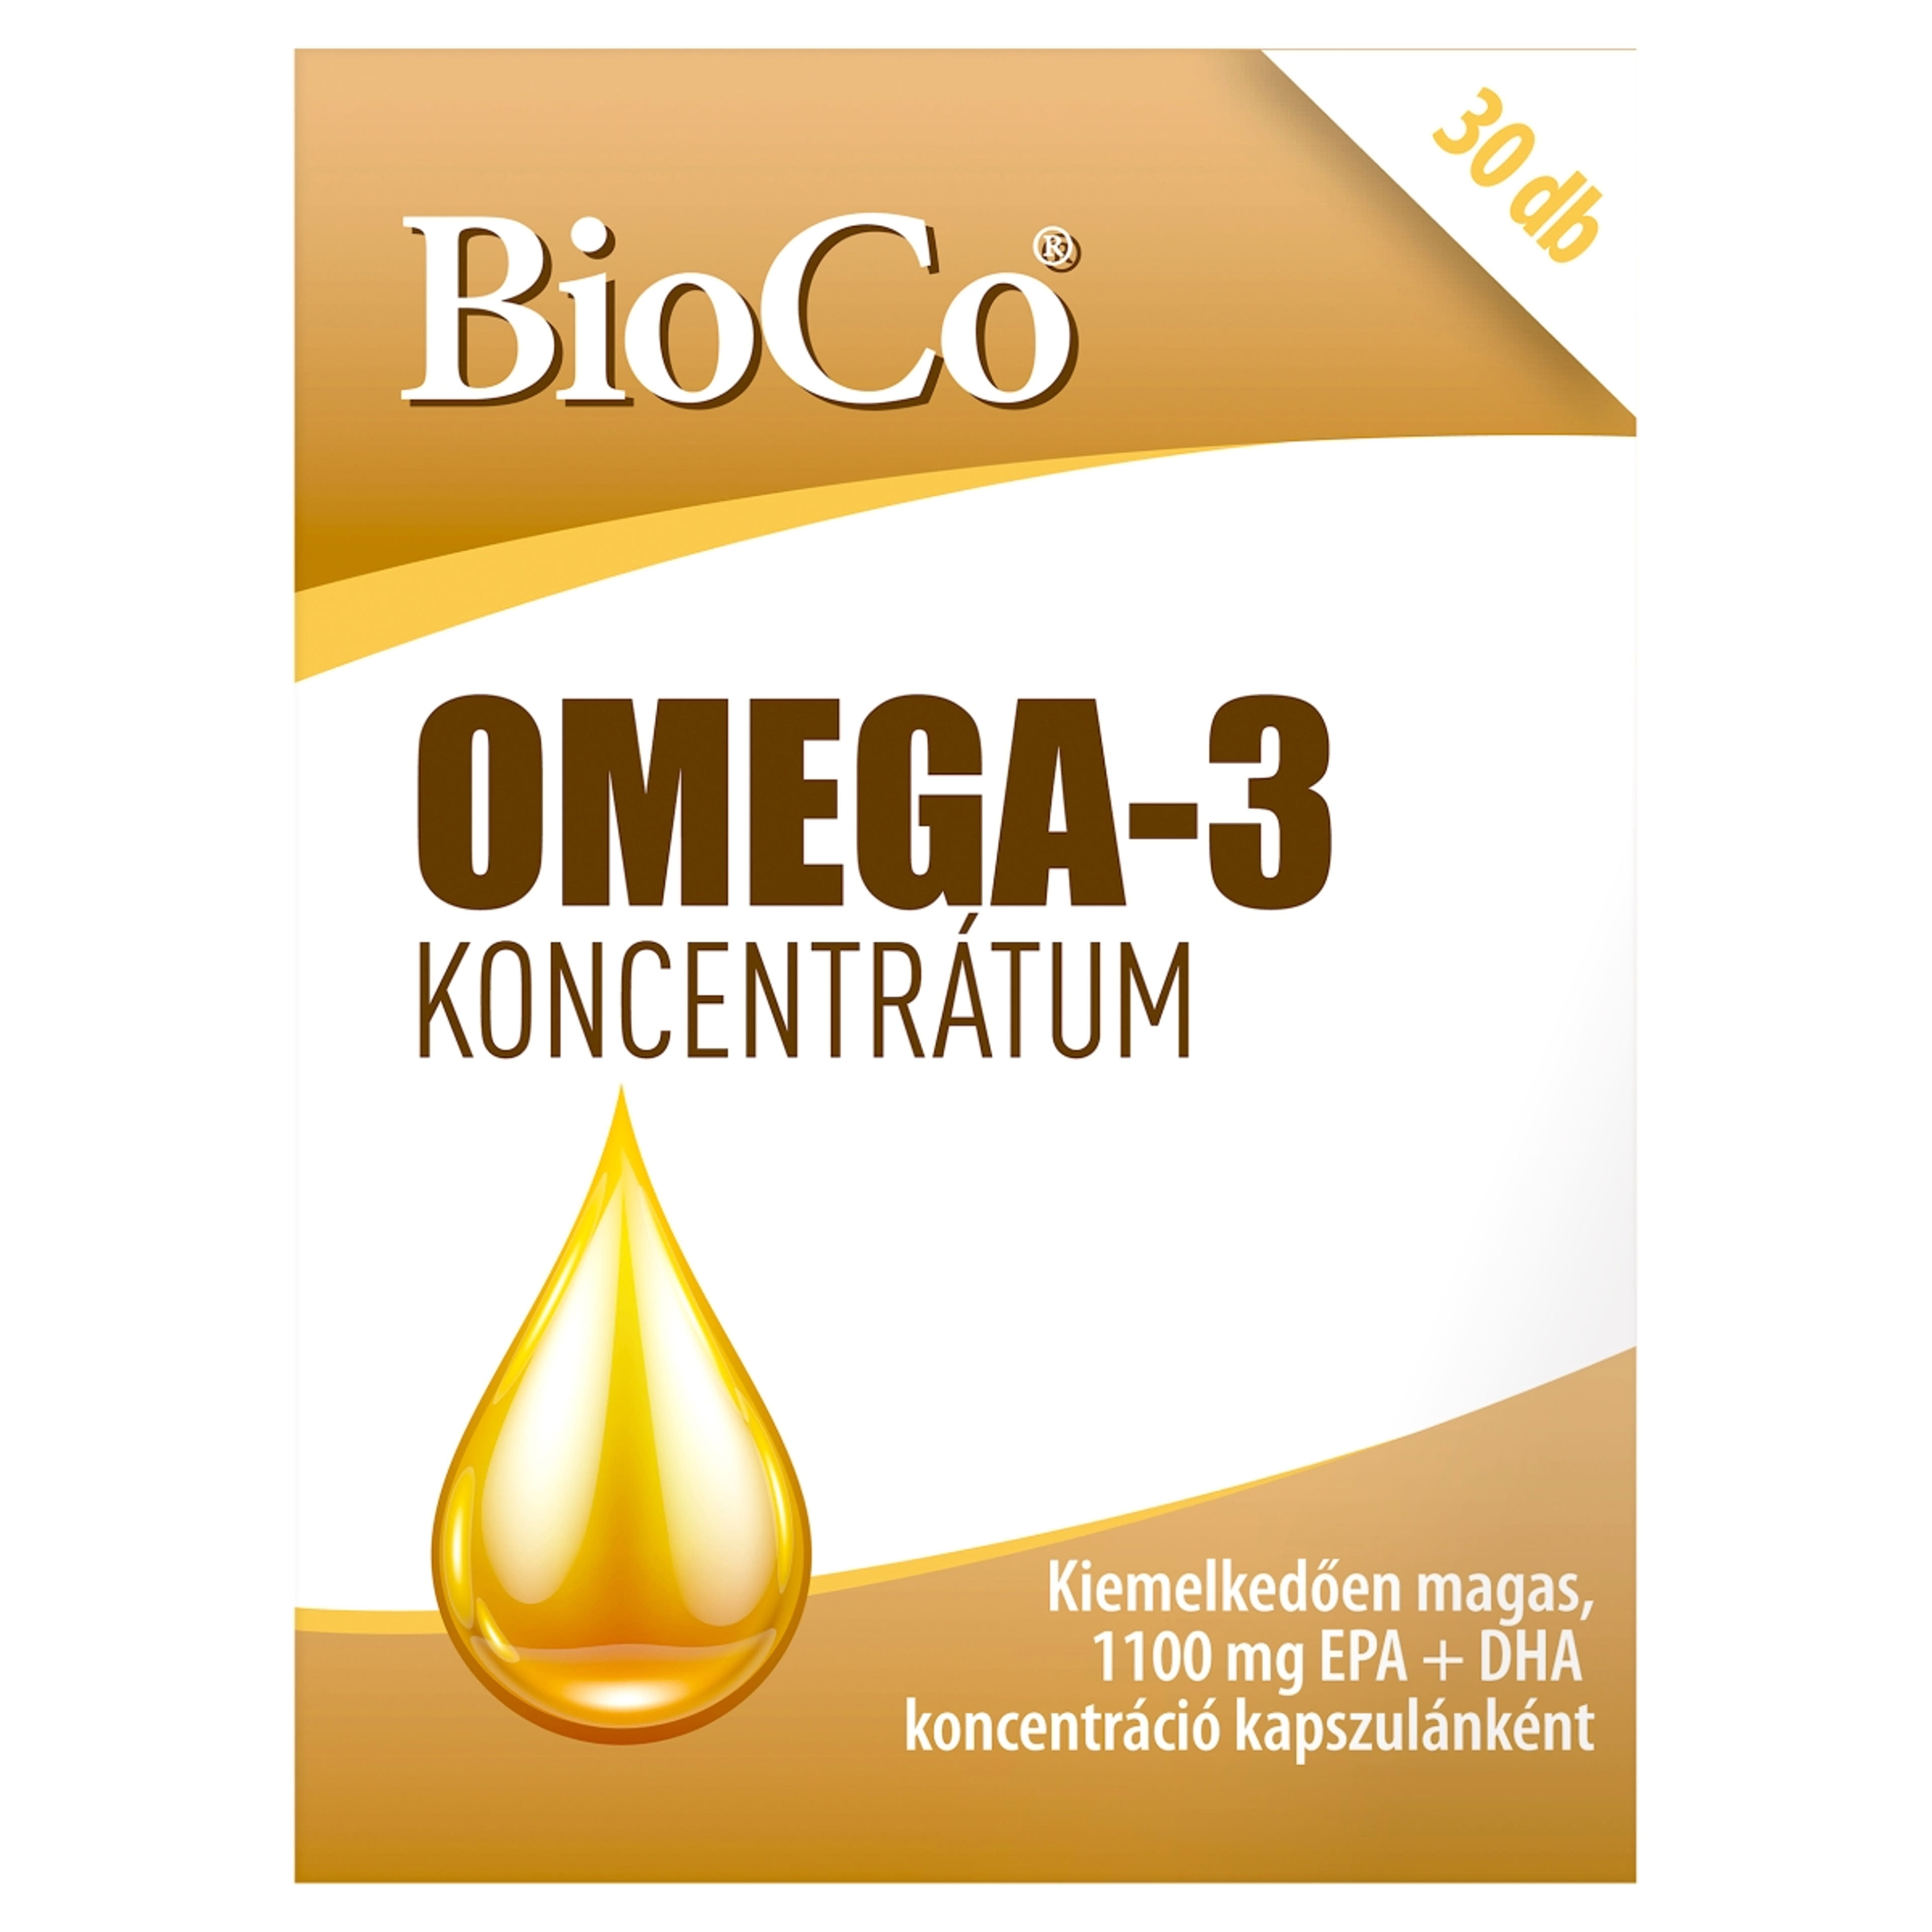 Bioco Omega-3 koncentrátum - 30 db